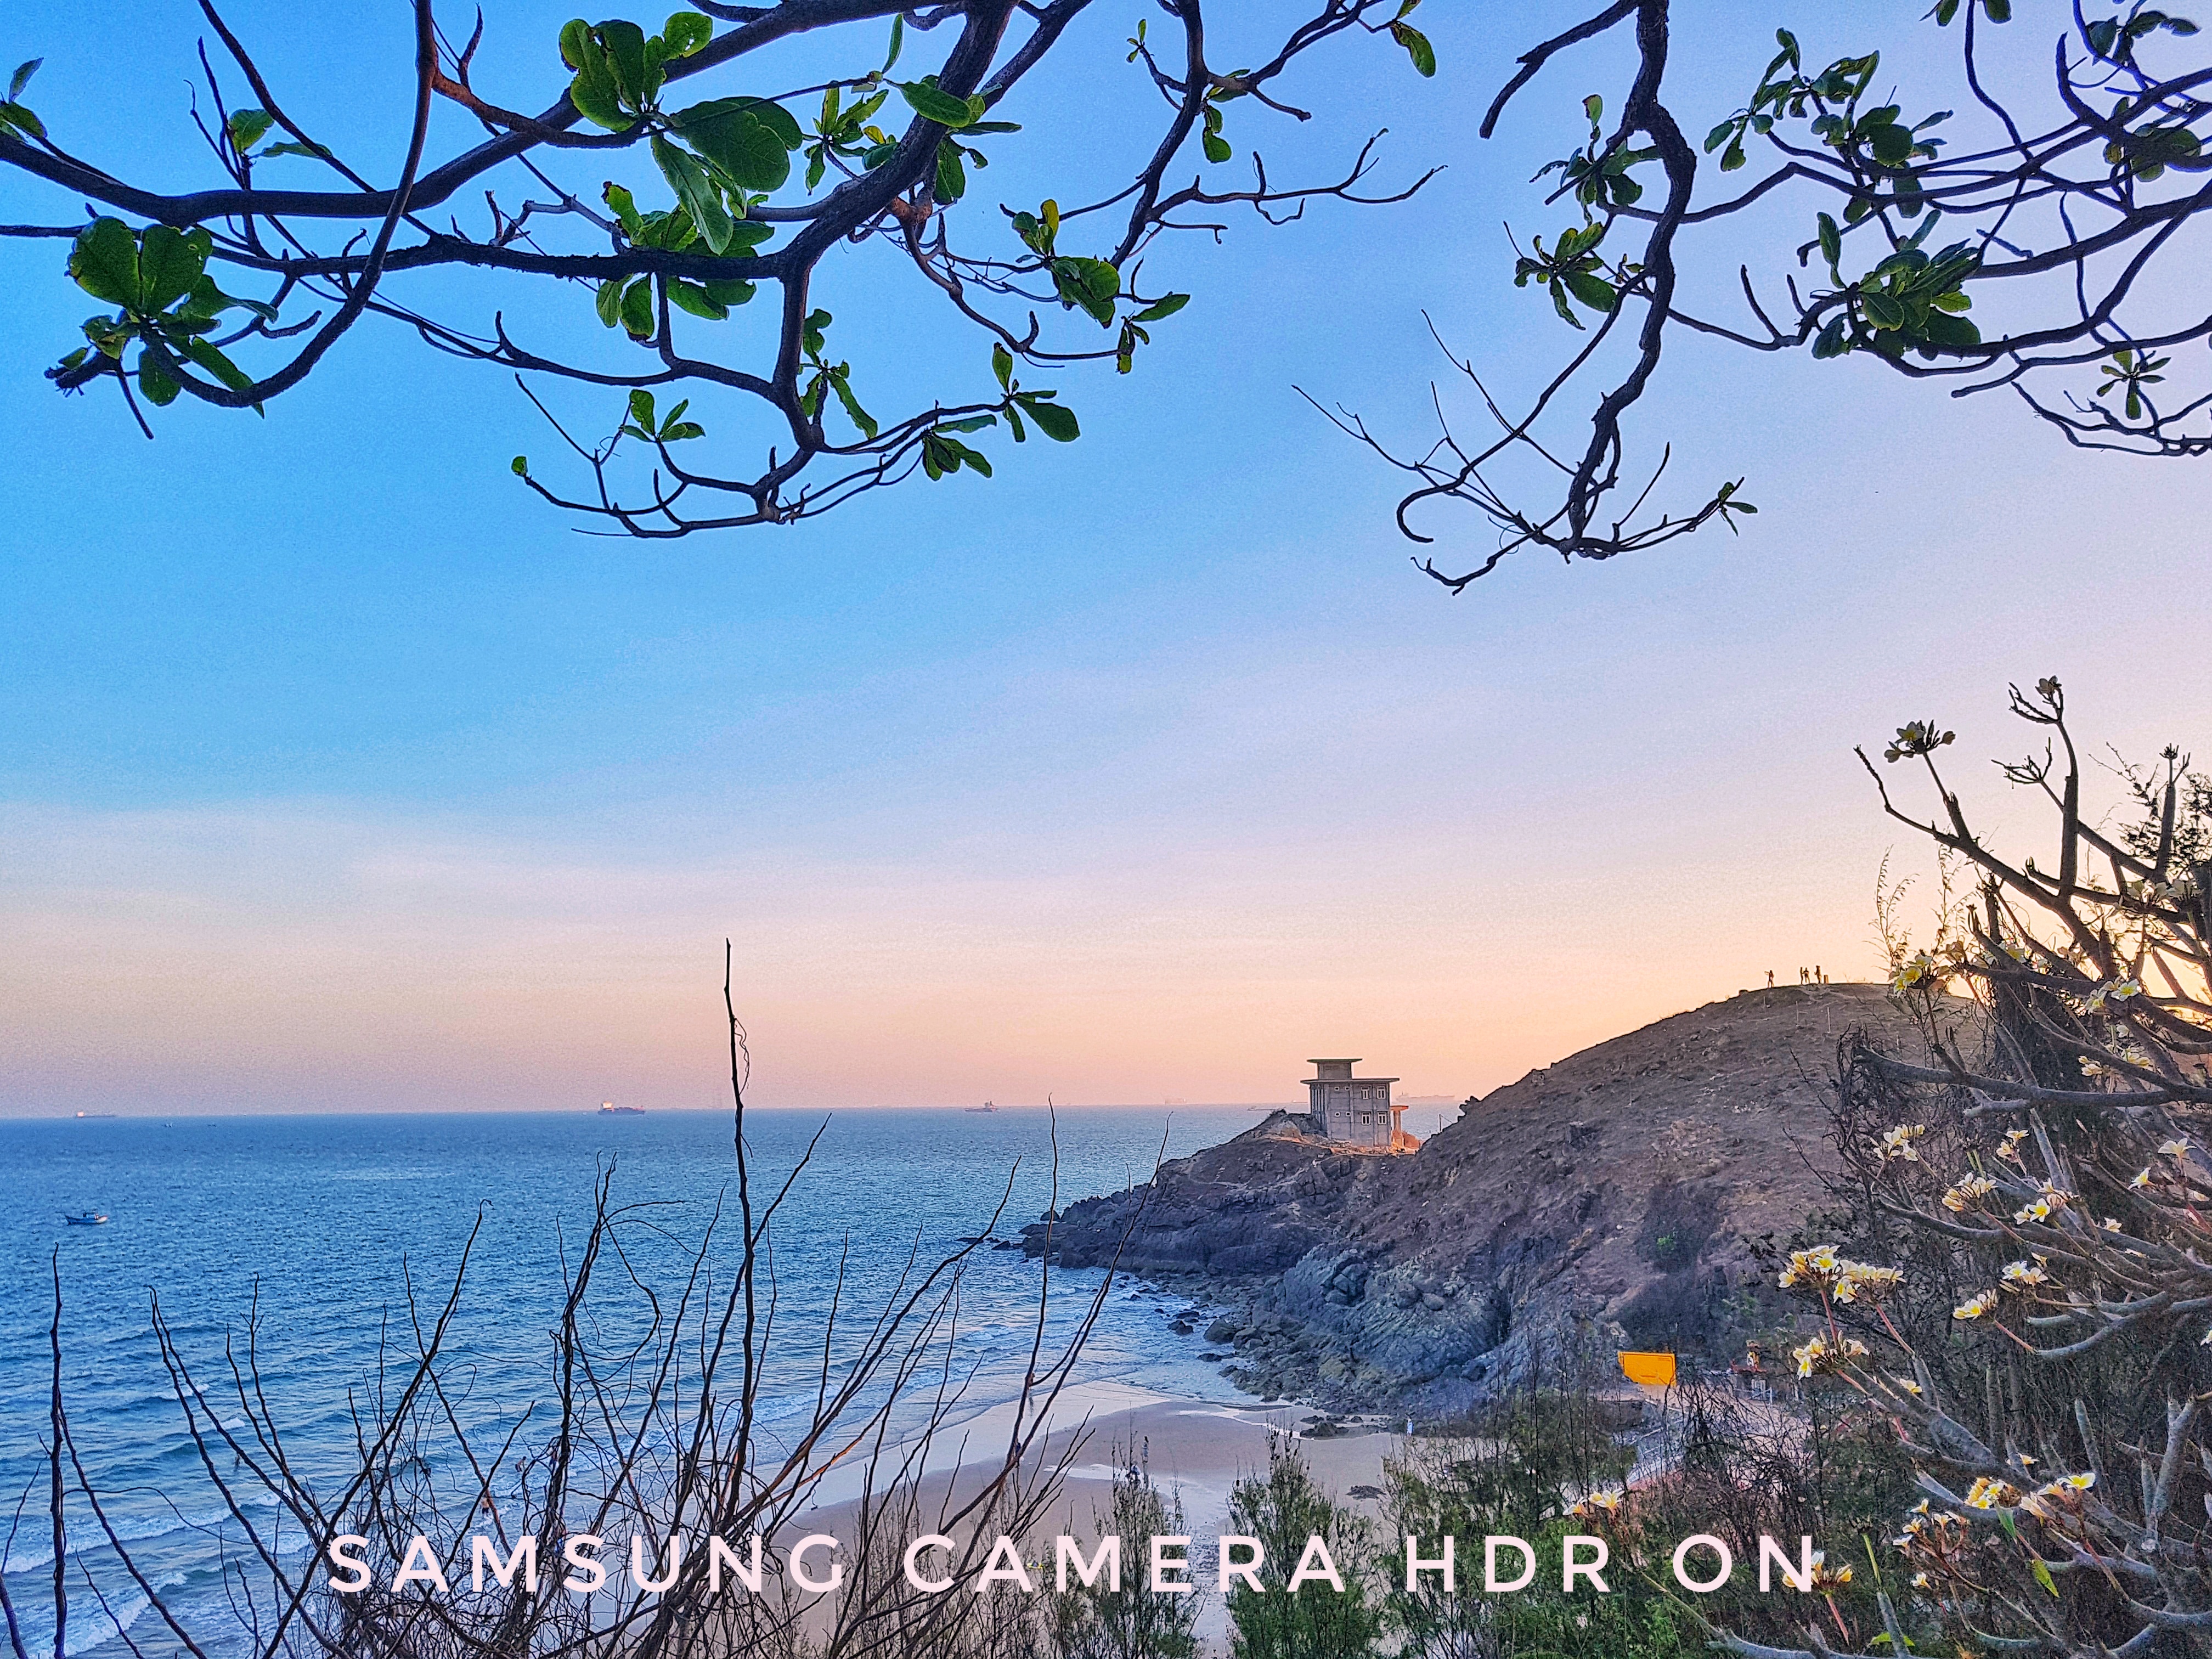 Samsung camera hdr on -01 (1).jpeg